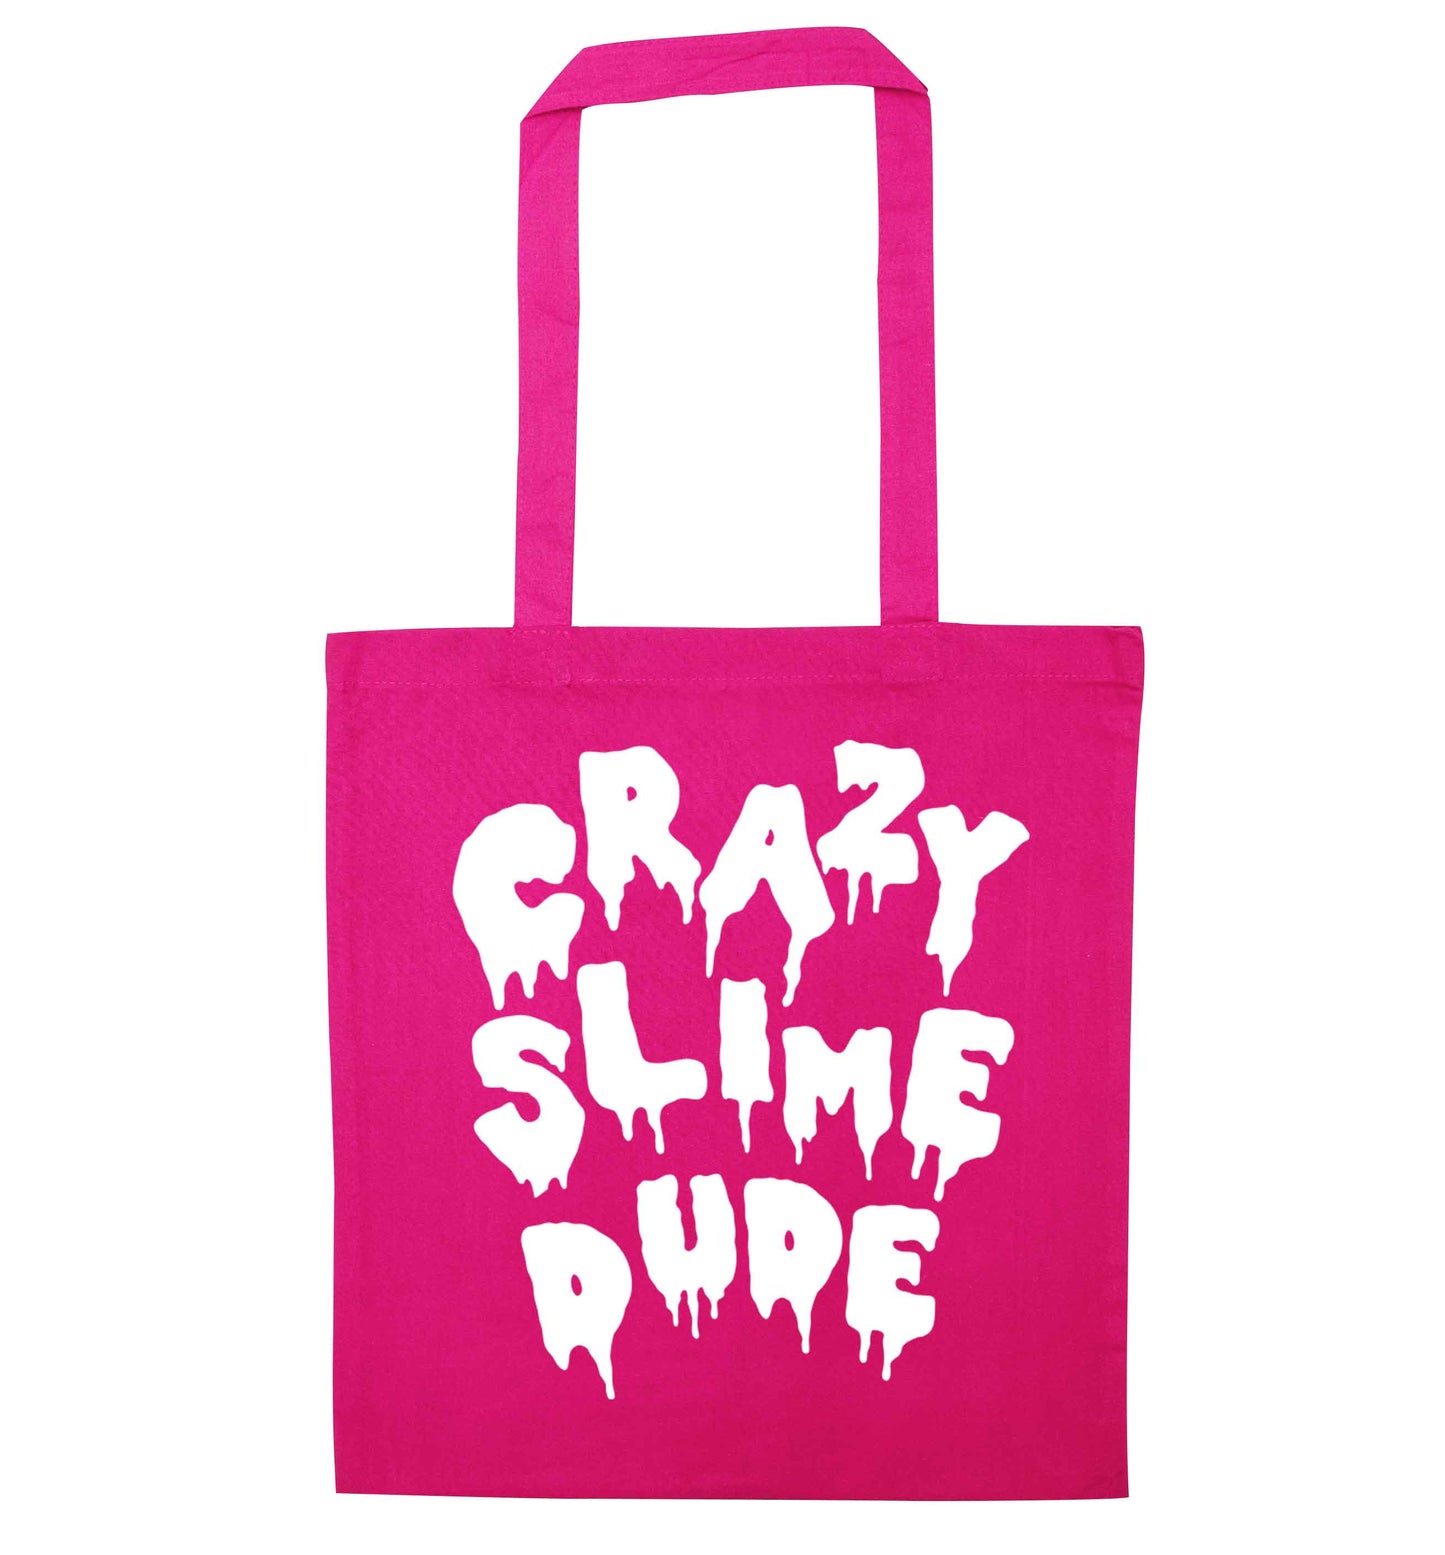 Crazy slime dude pink tote bag